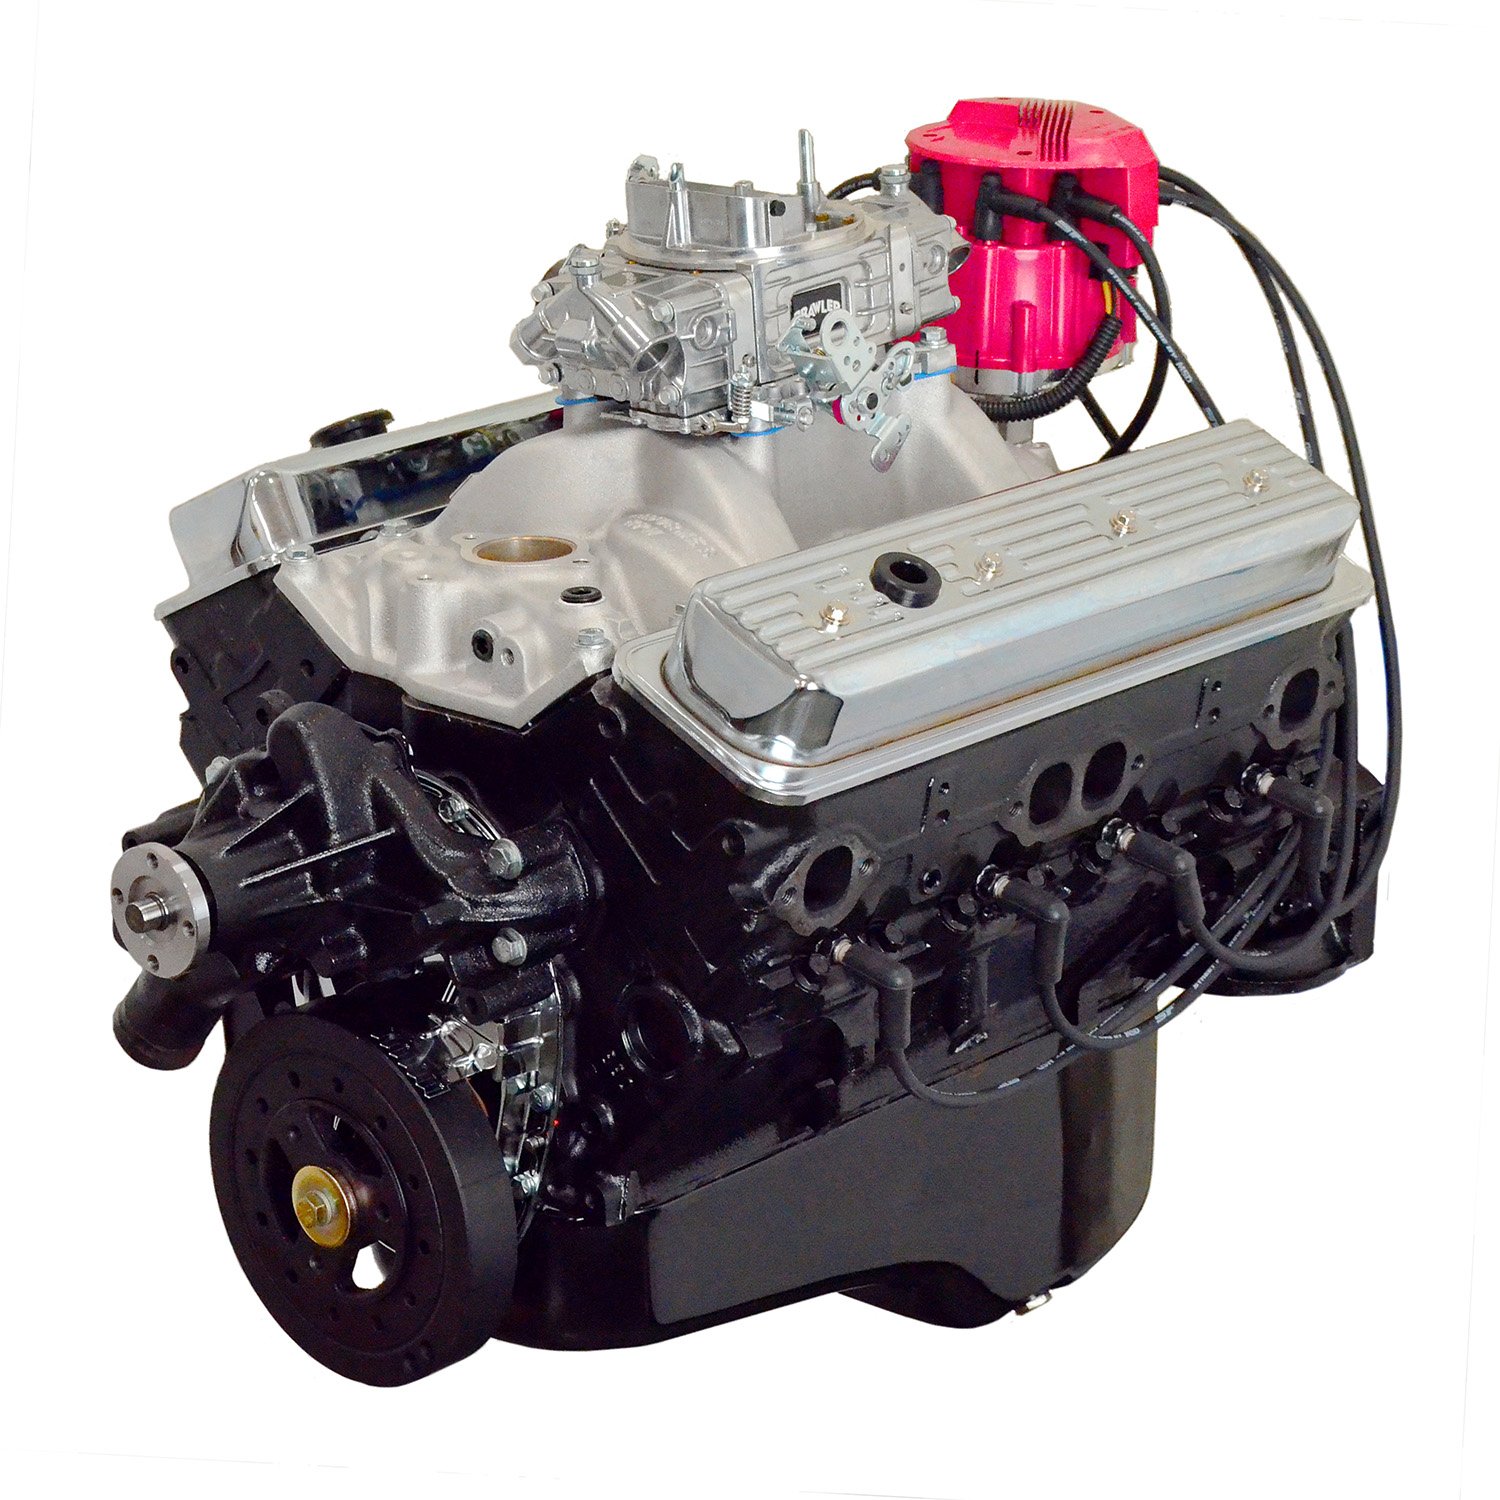 HP99C High Performance Crate Engine Small Block Chevy 350ci / 290HP / 375TQ